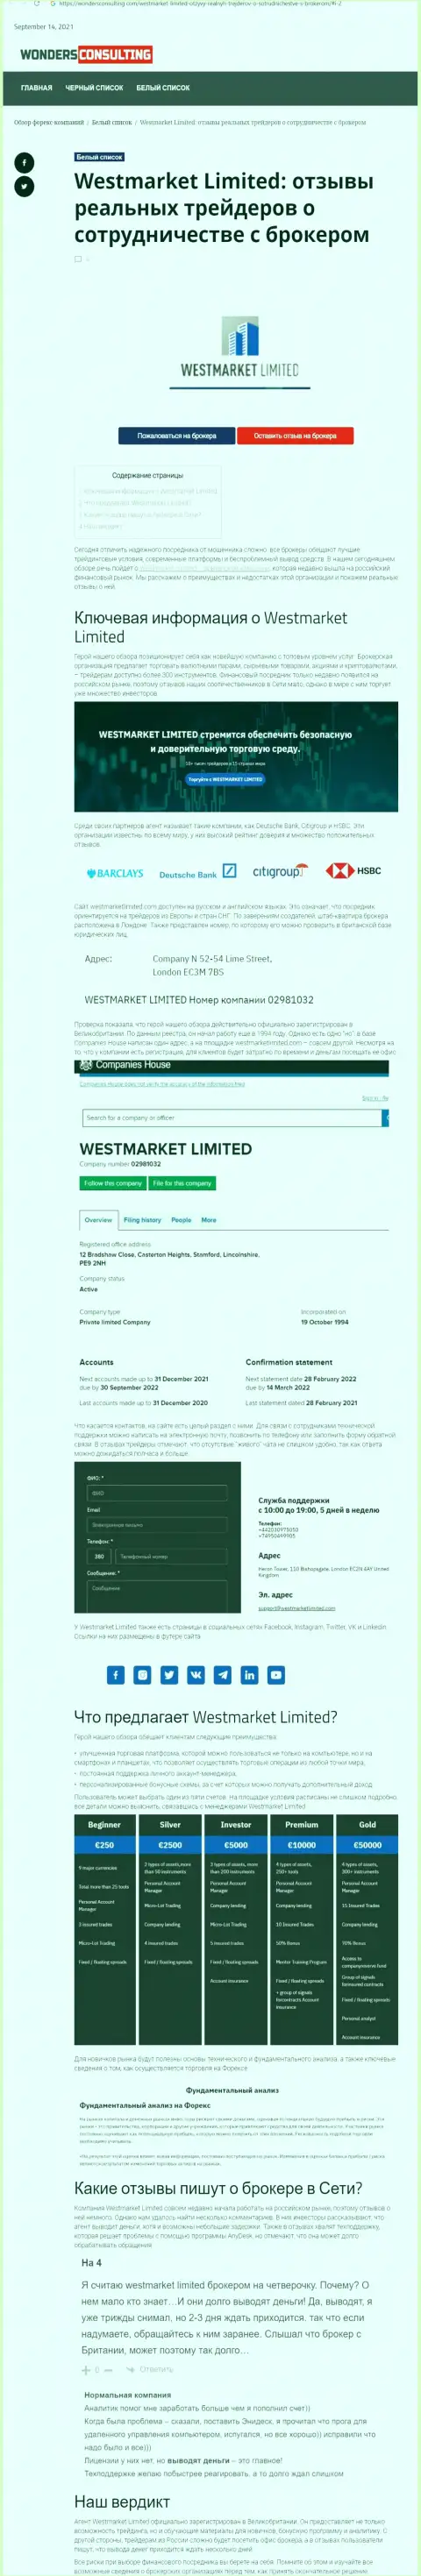 Материал о форекс дилере WestMarketLimited на информационном сервисе wondersconsulting com